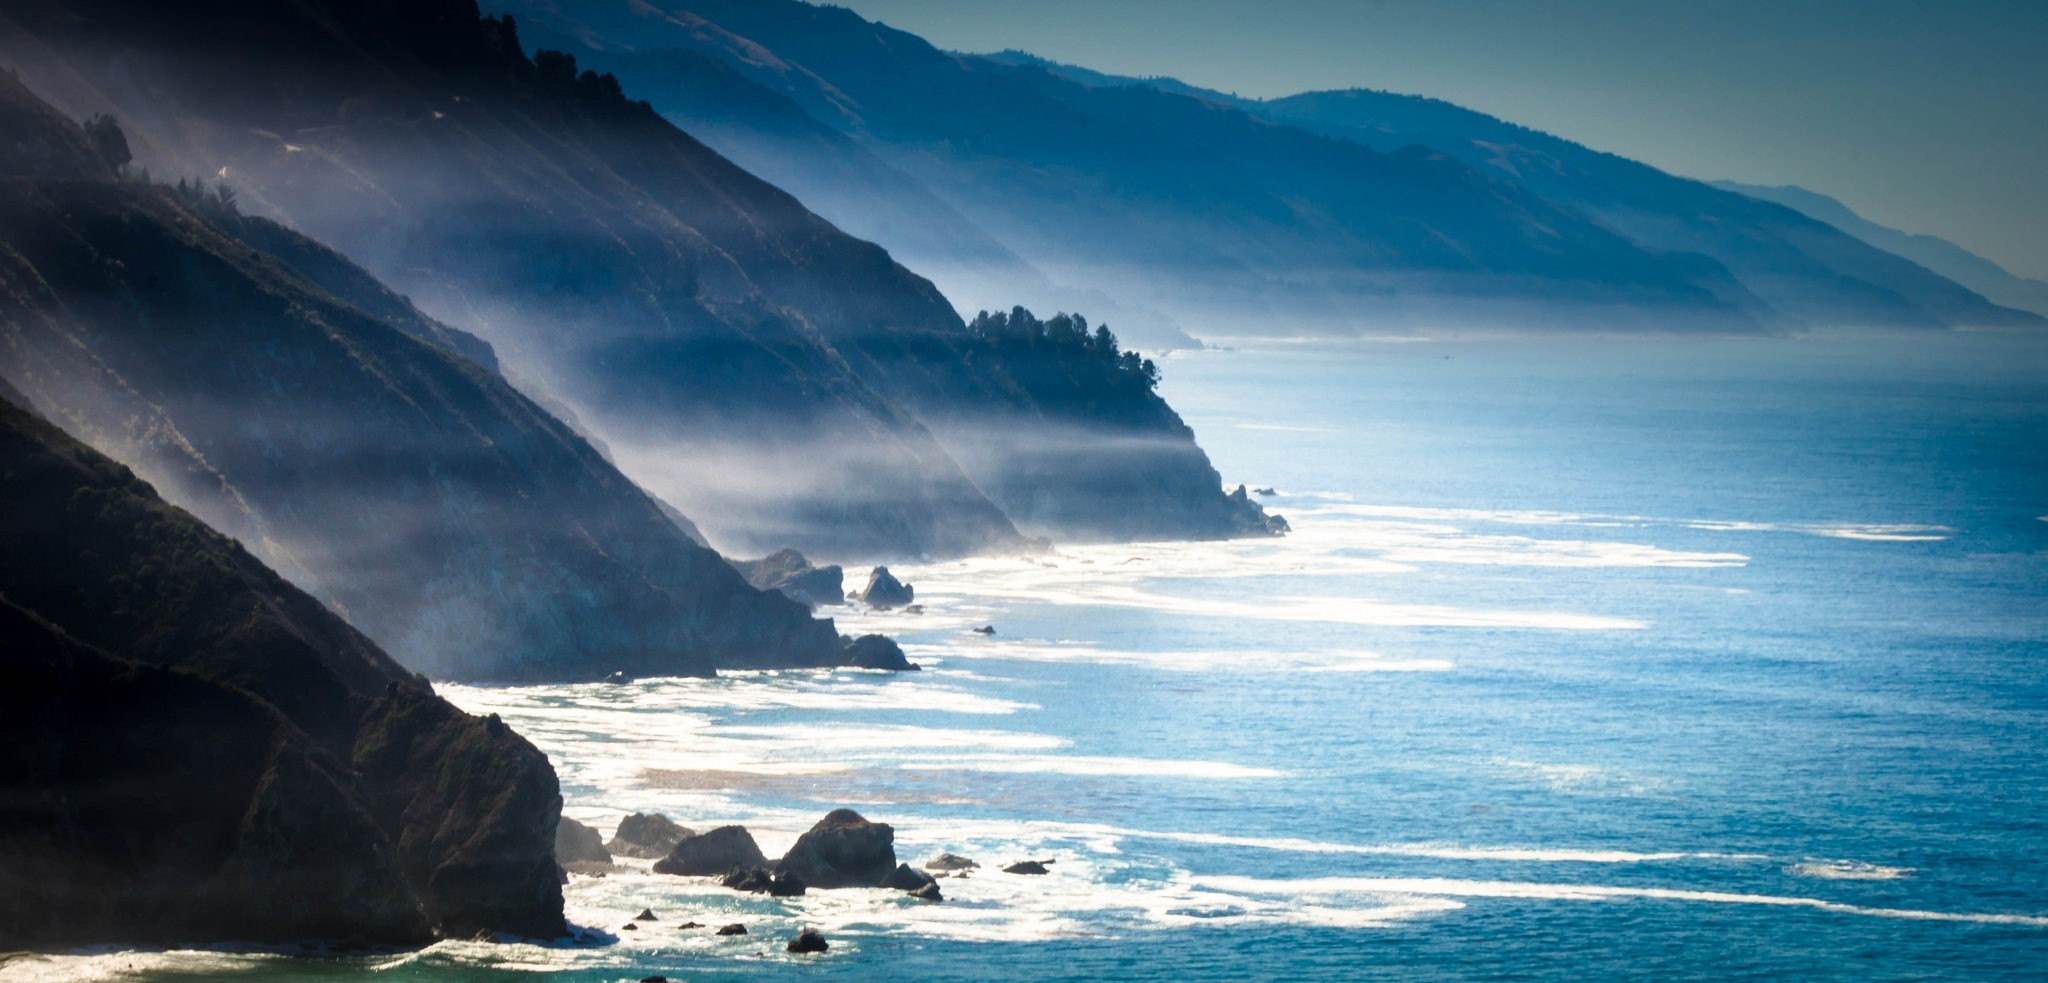 General 2048x983 landscape nature mist sea mountains coast rocks California Big Sur USA